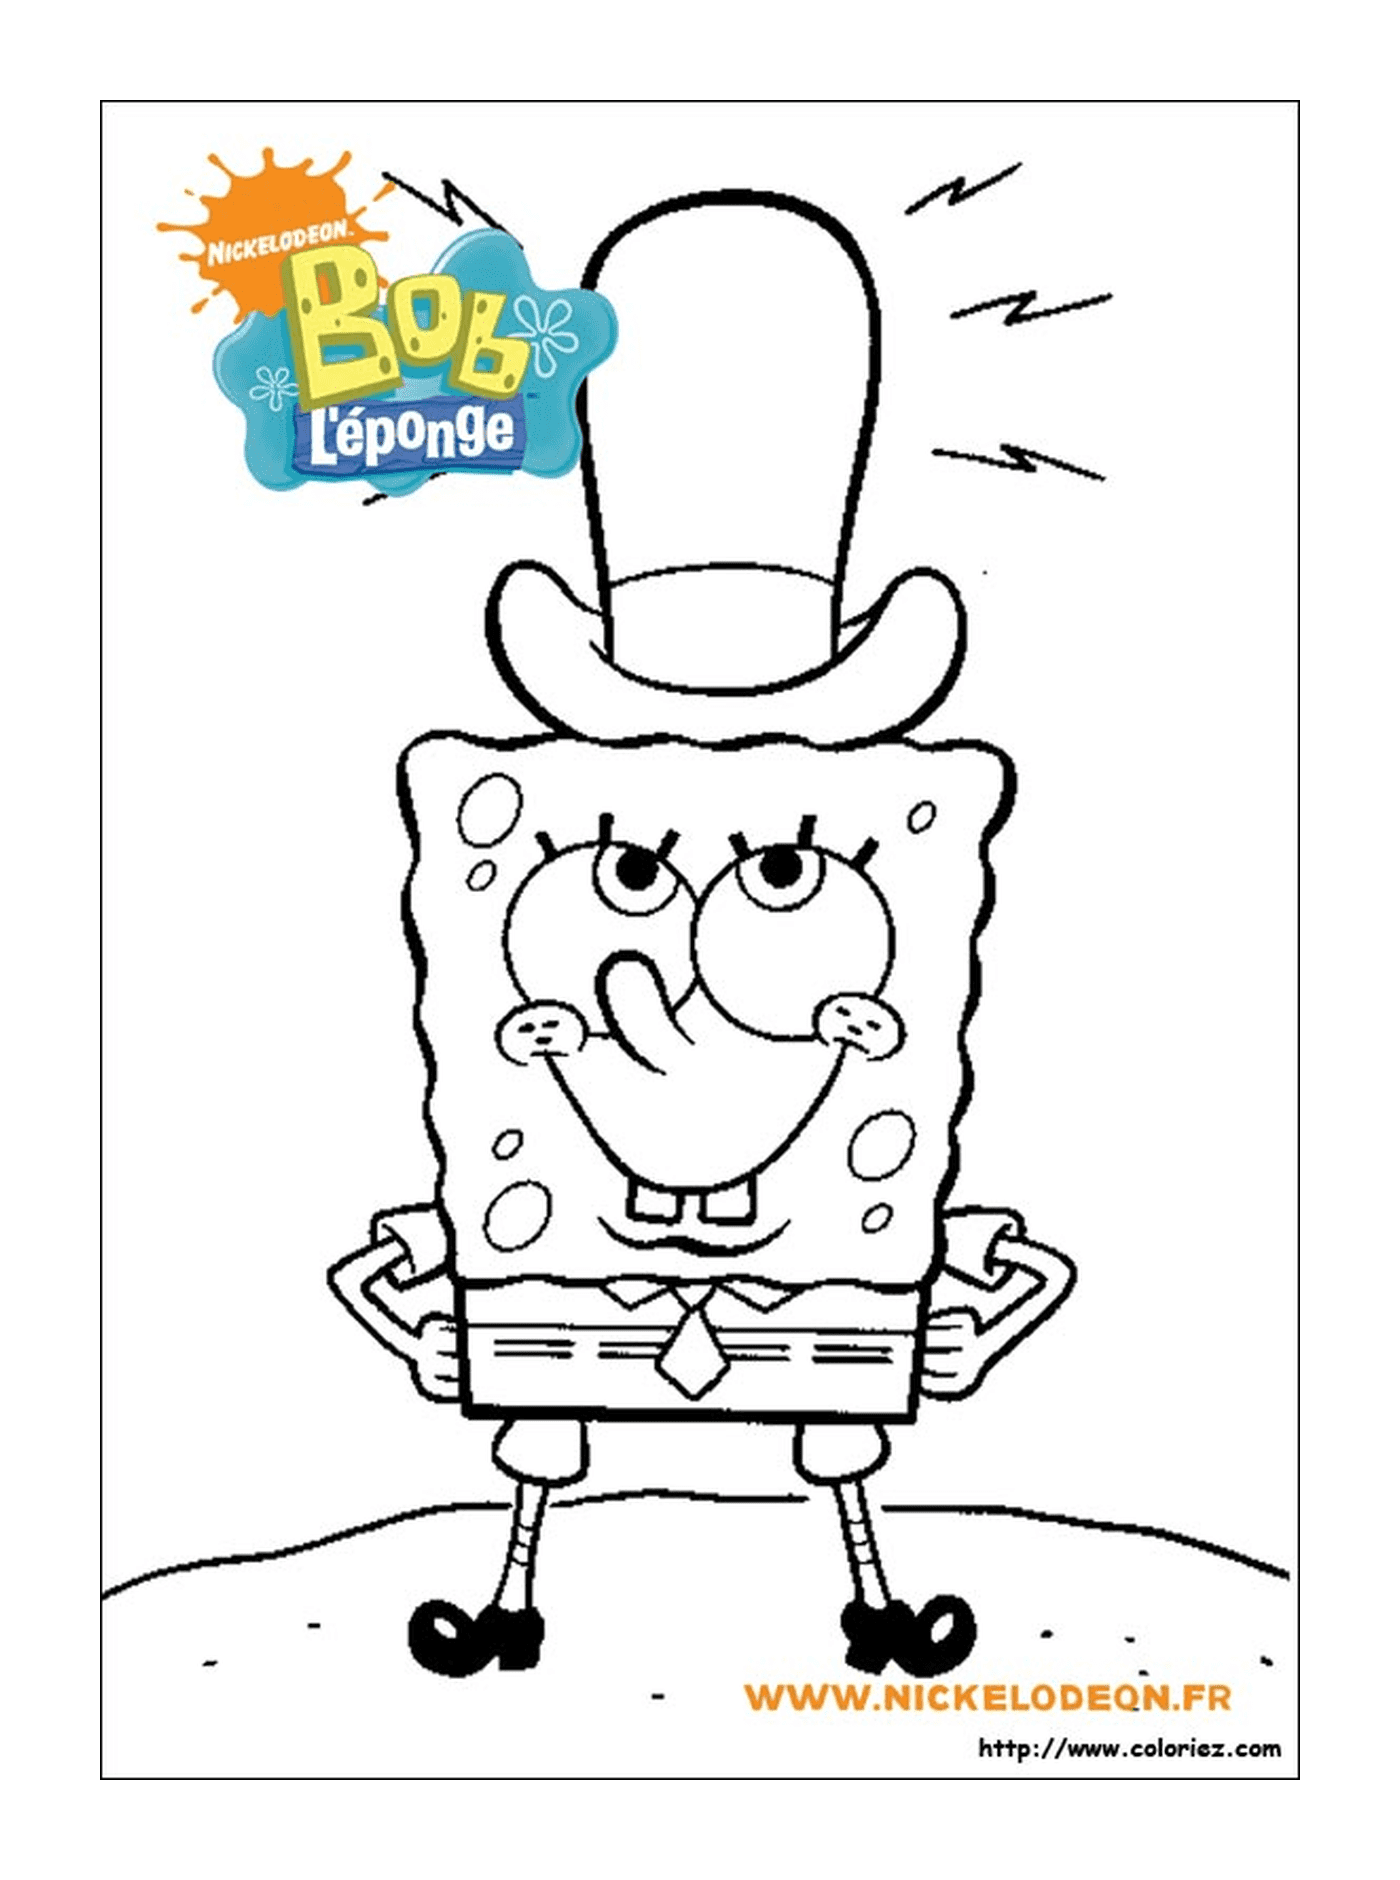  Uno Spongebob che indossa una top-of-the-shape 